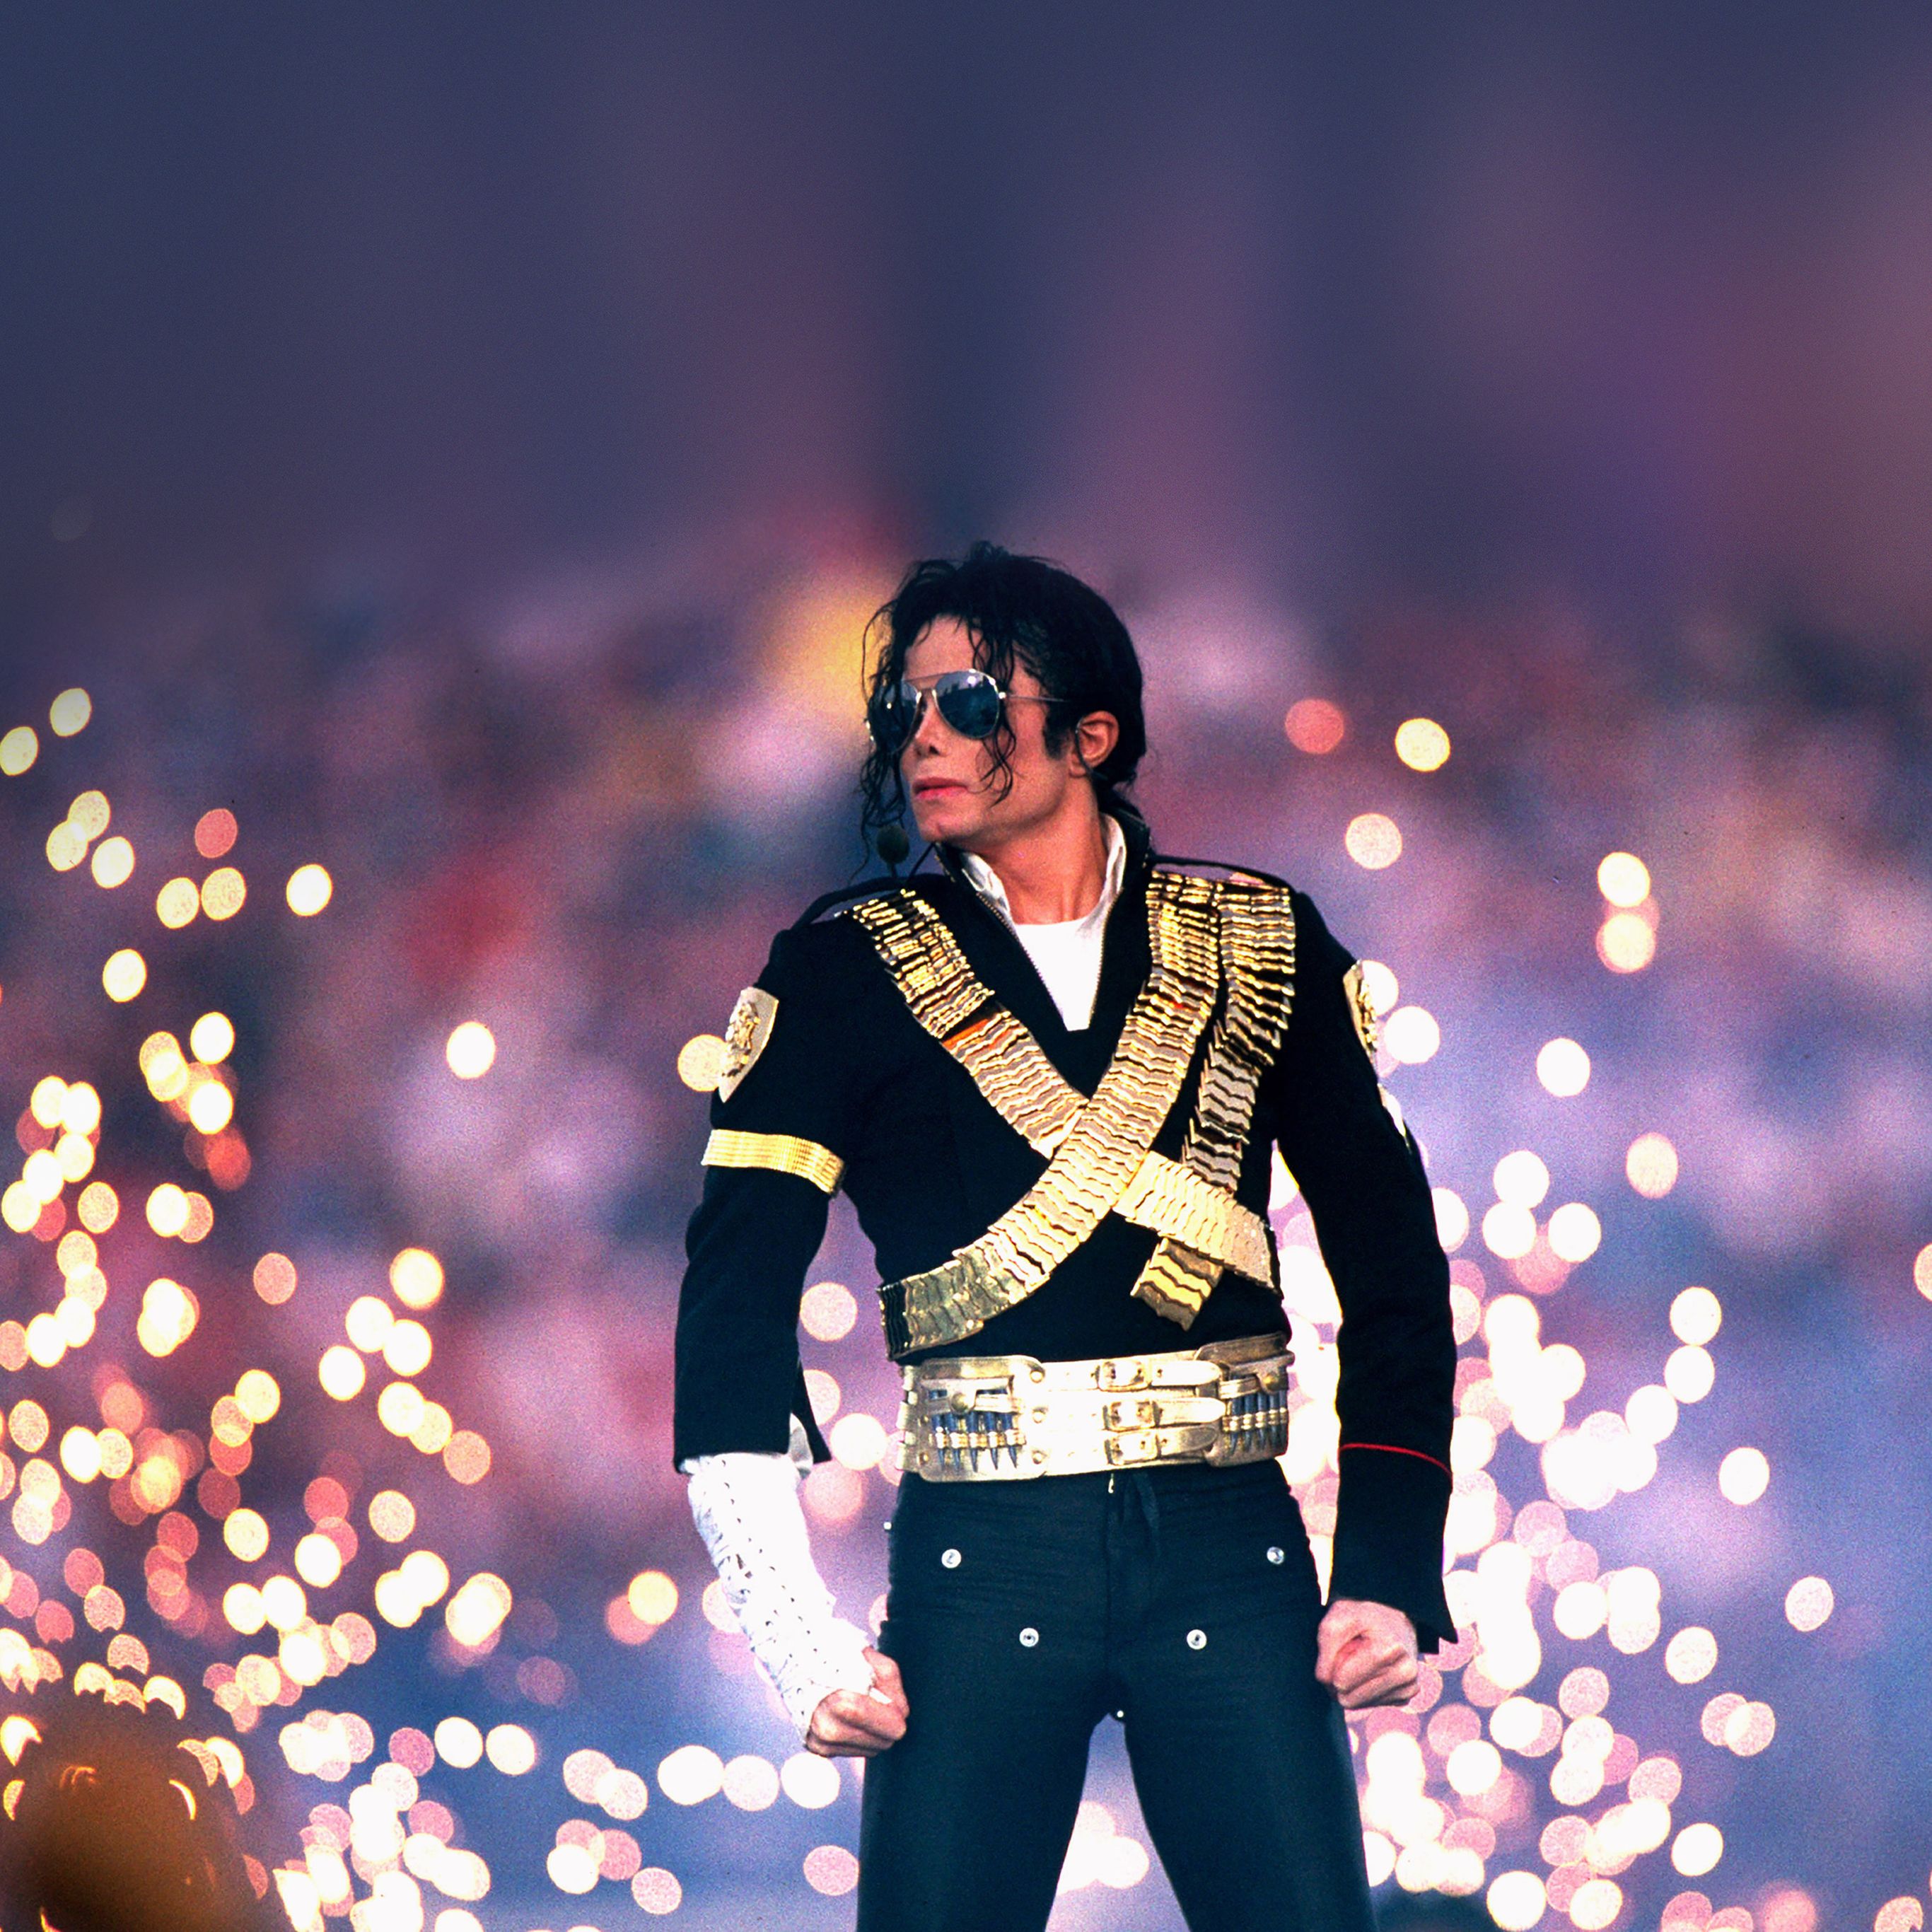 Michael Jackson King Pop Wallpapers - Cave